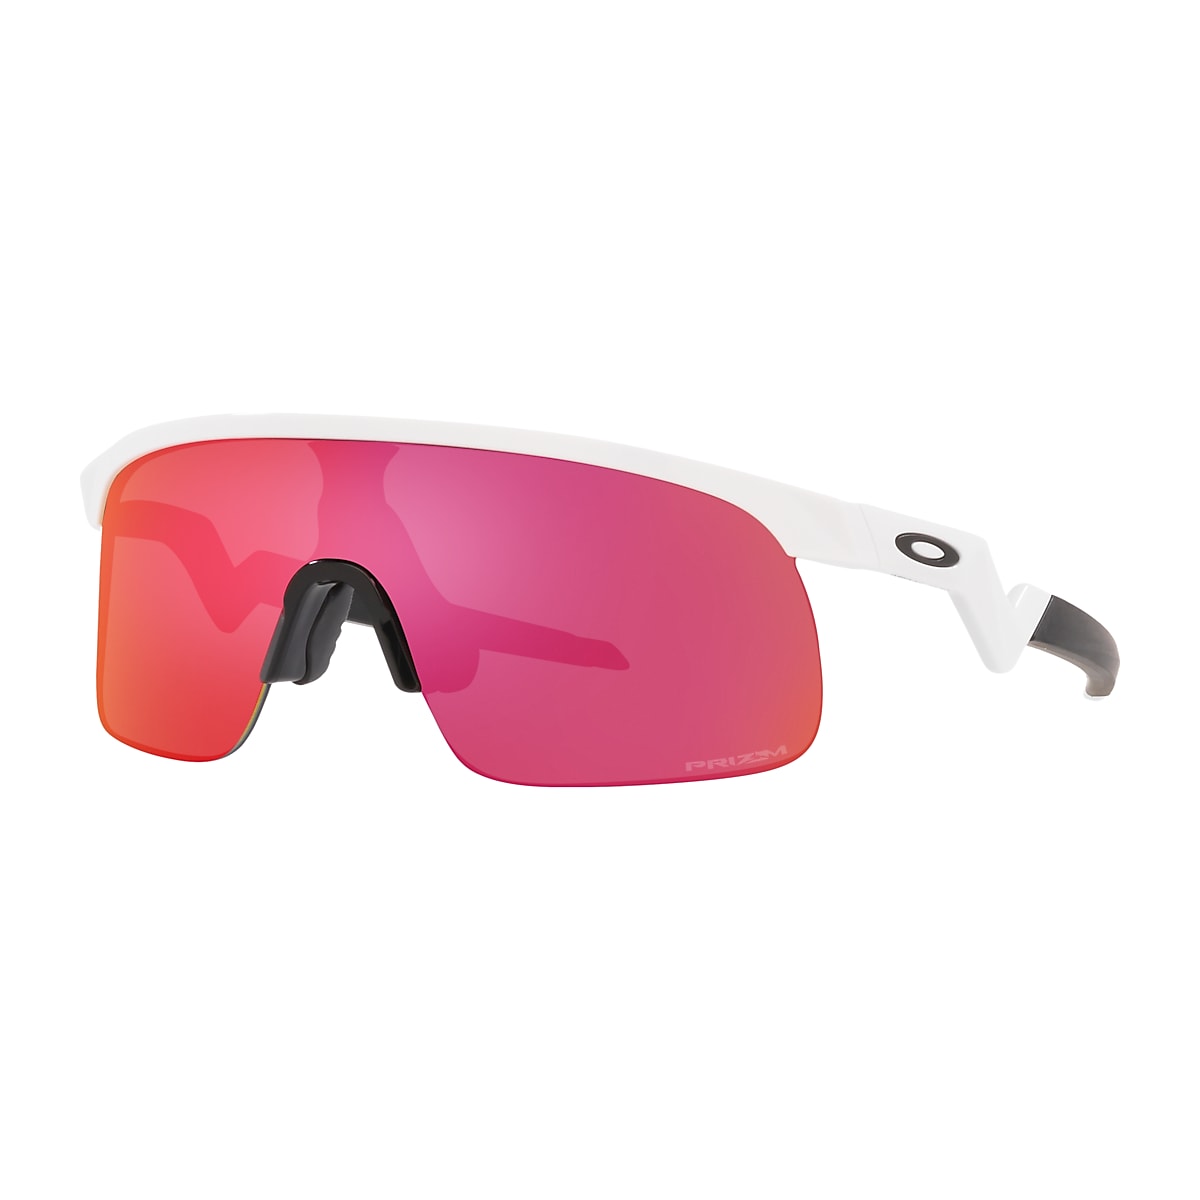 Tage en risiko Grøn ankomme Resistor (Youth Fit) Prizm Field Lenses, Polished White Frame Sunglasses |  Oakley® EU